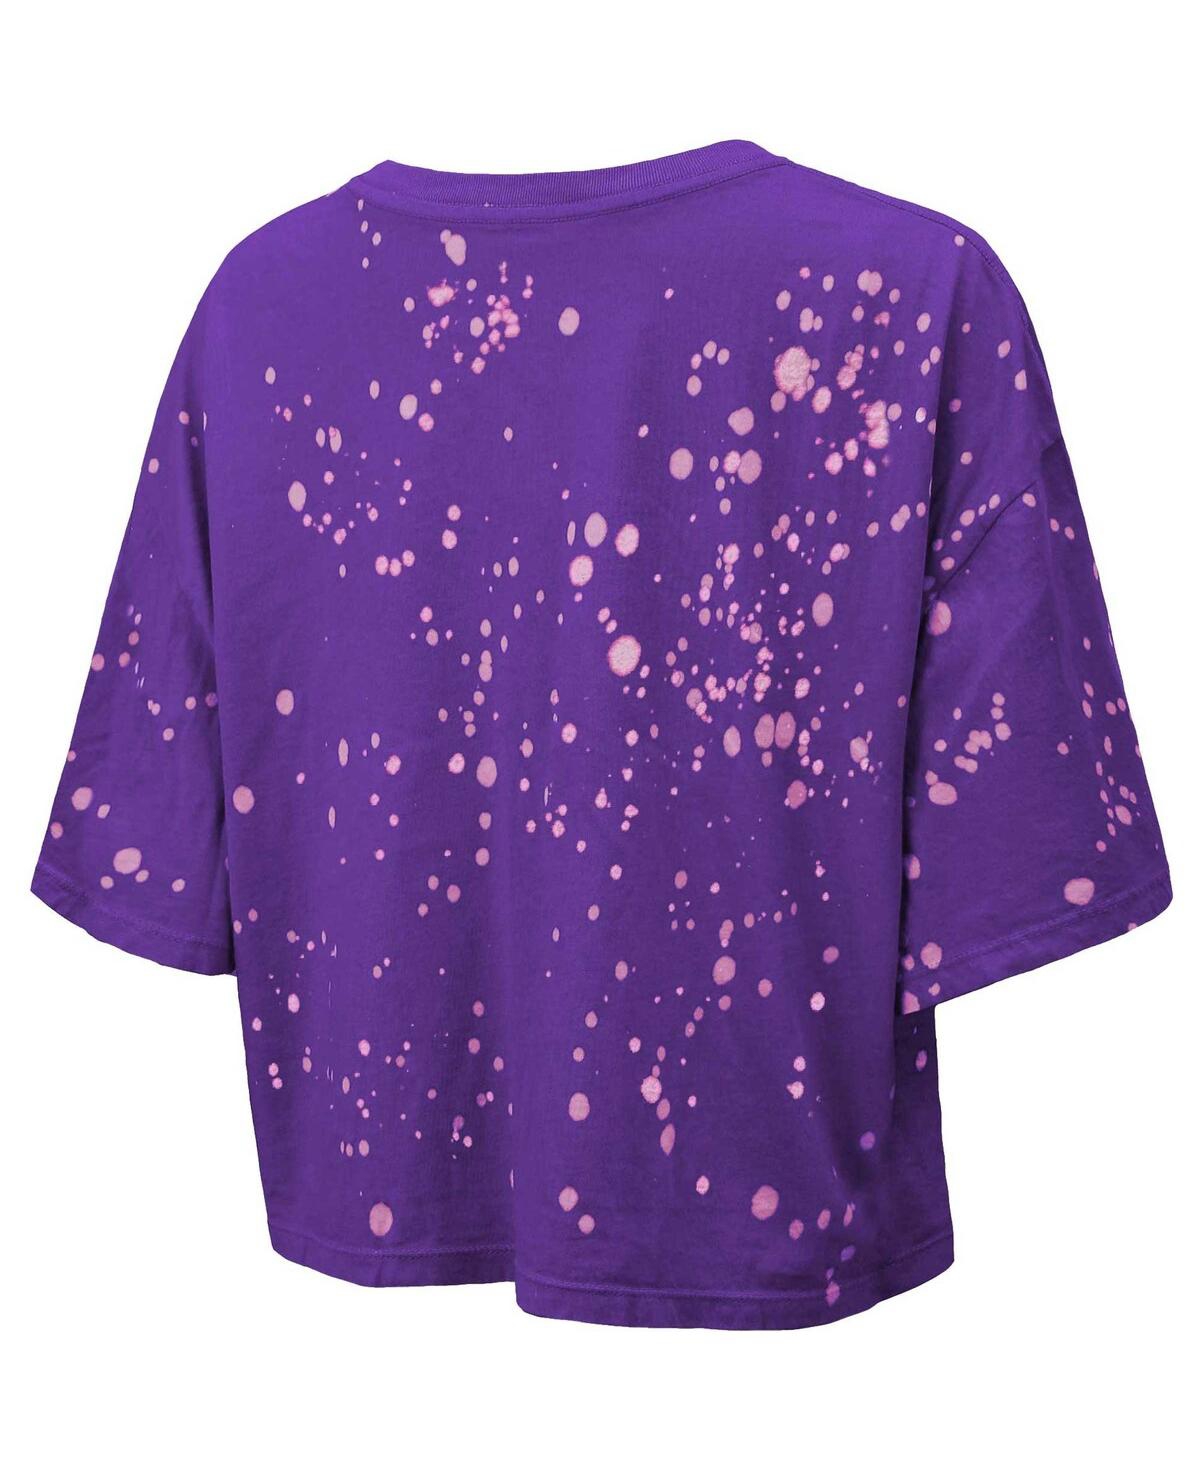 Shop Majestic Women's  Threads Purple Distressed Minnesota Vikings Bleach Splatter Notch Neck Crop T-shirt